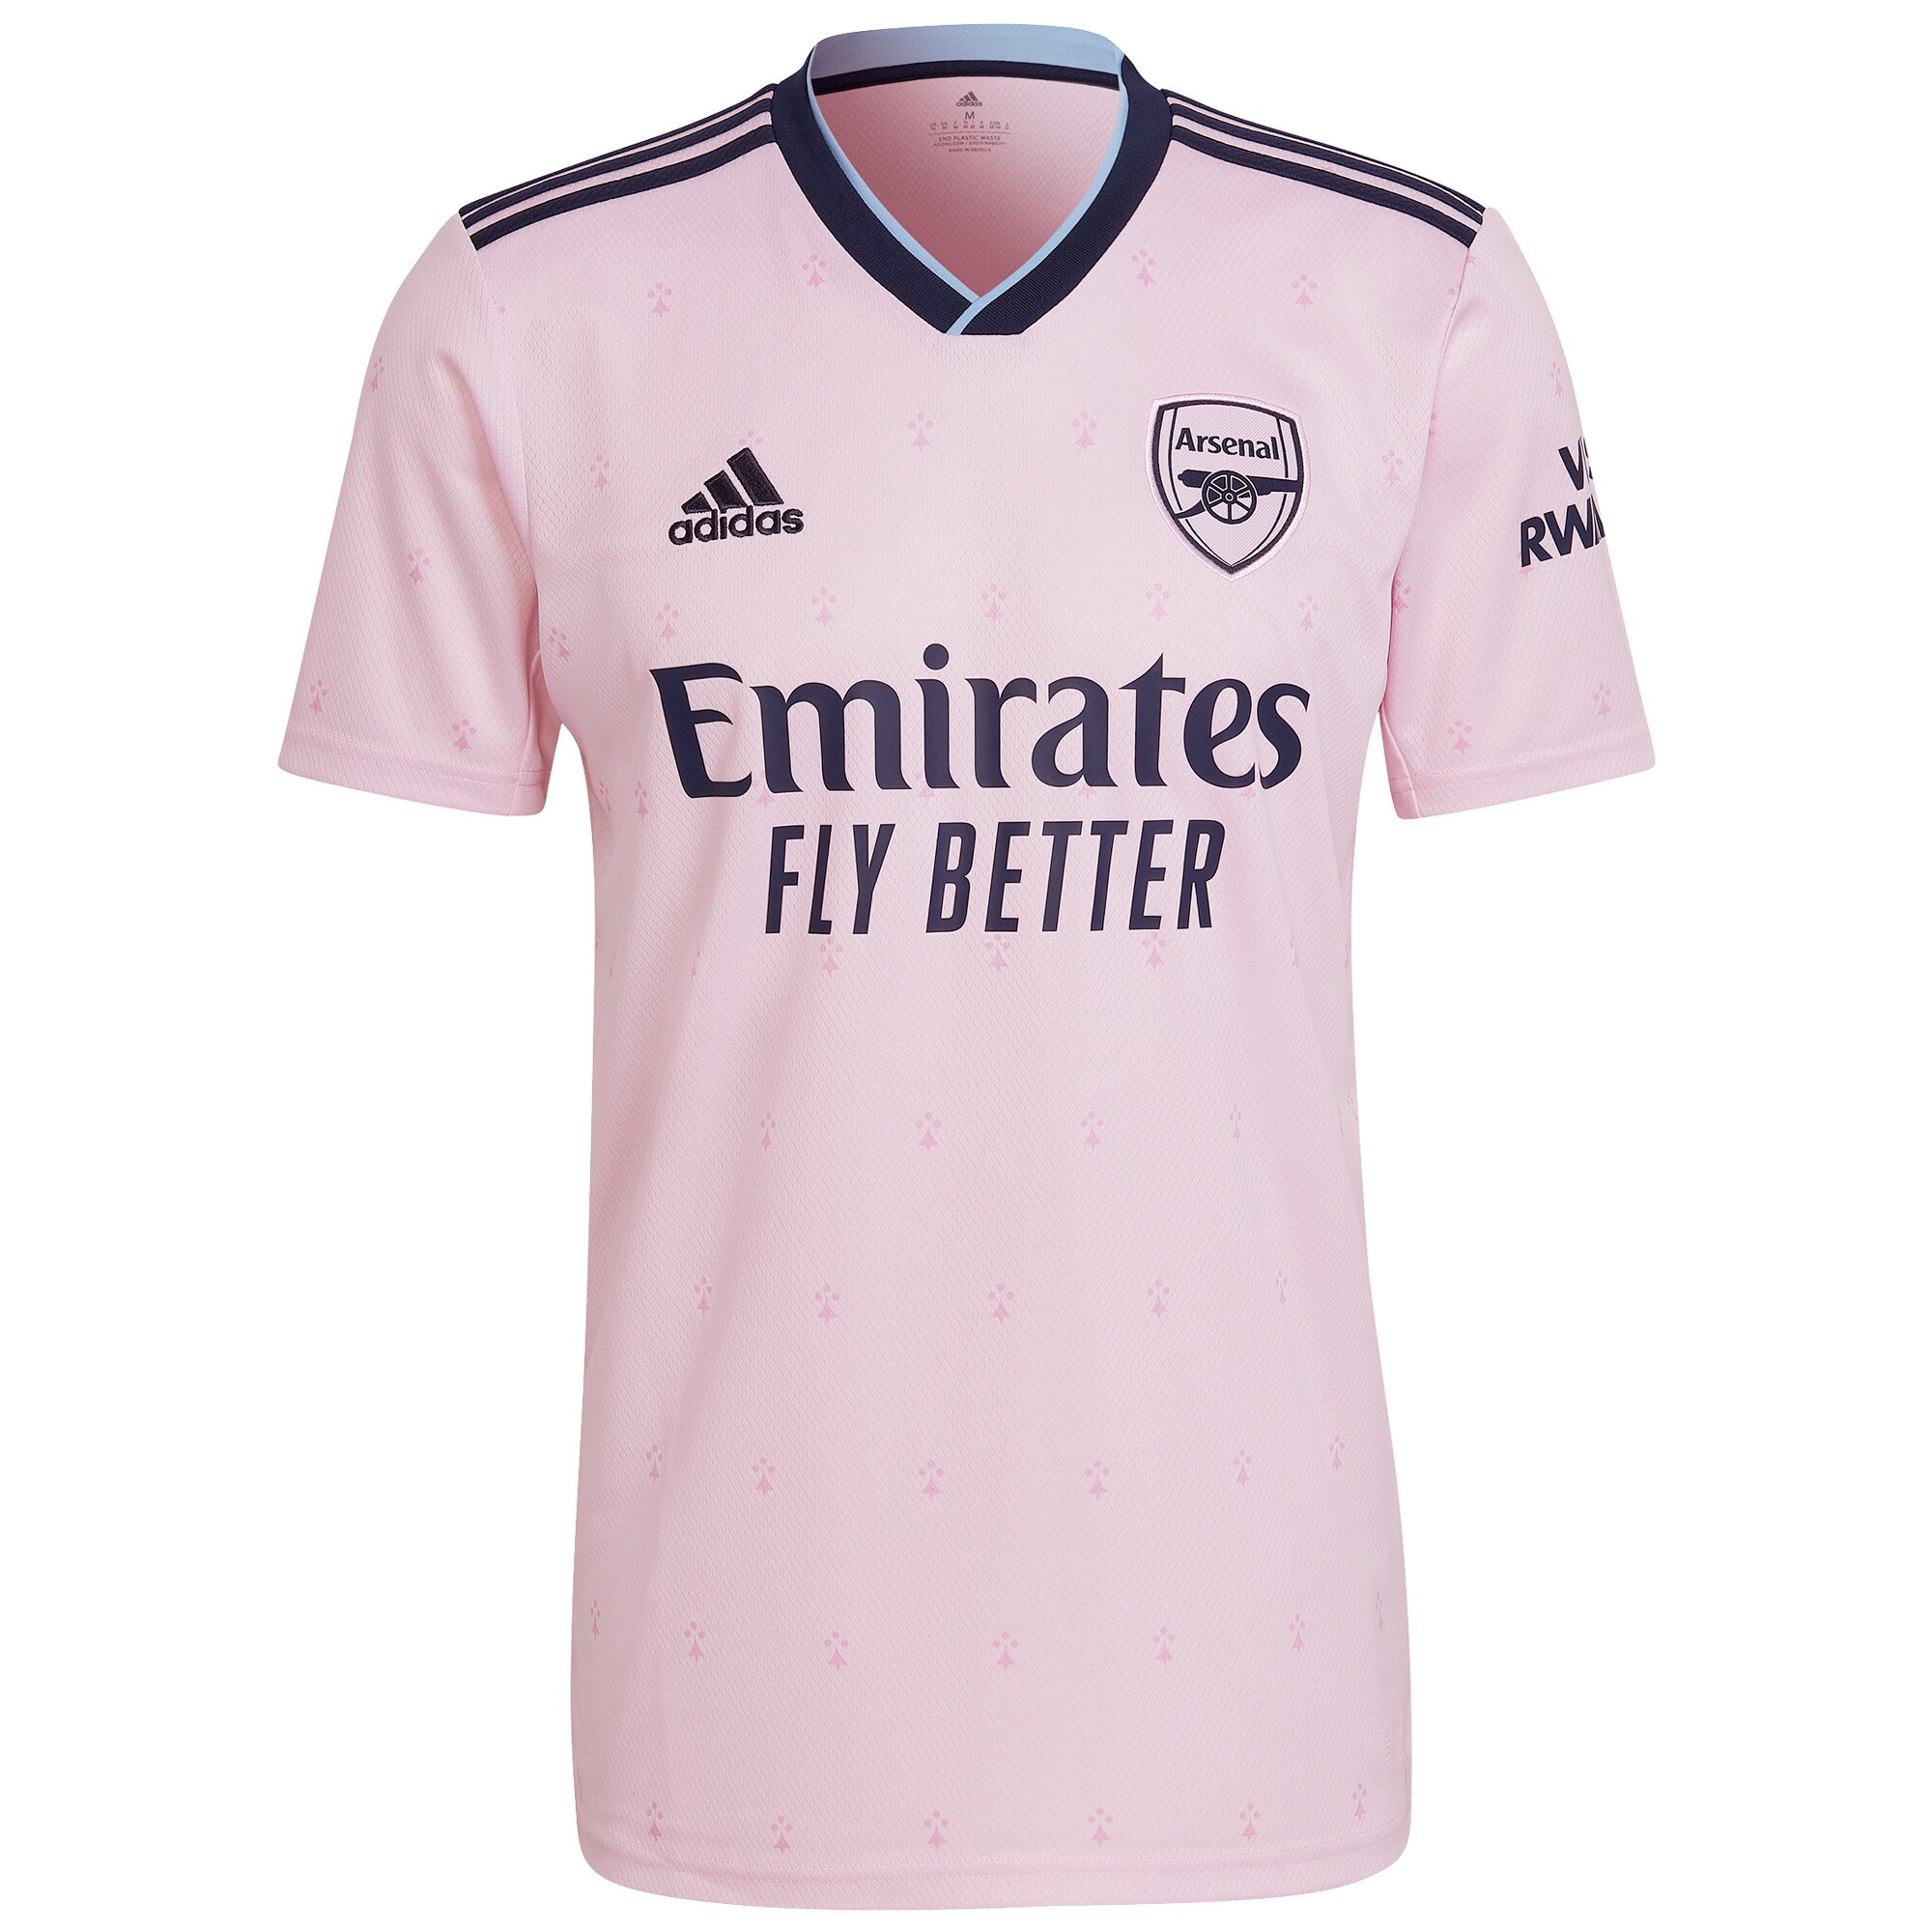 Arsenal Third Shirt 2022-23 with Ødegaard 8 printing